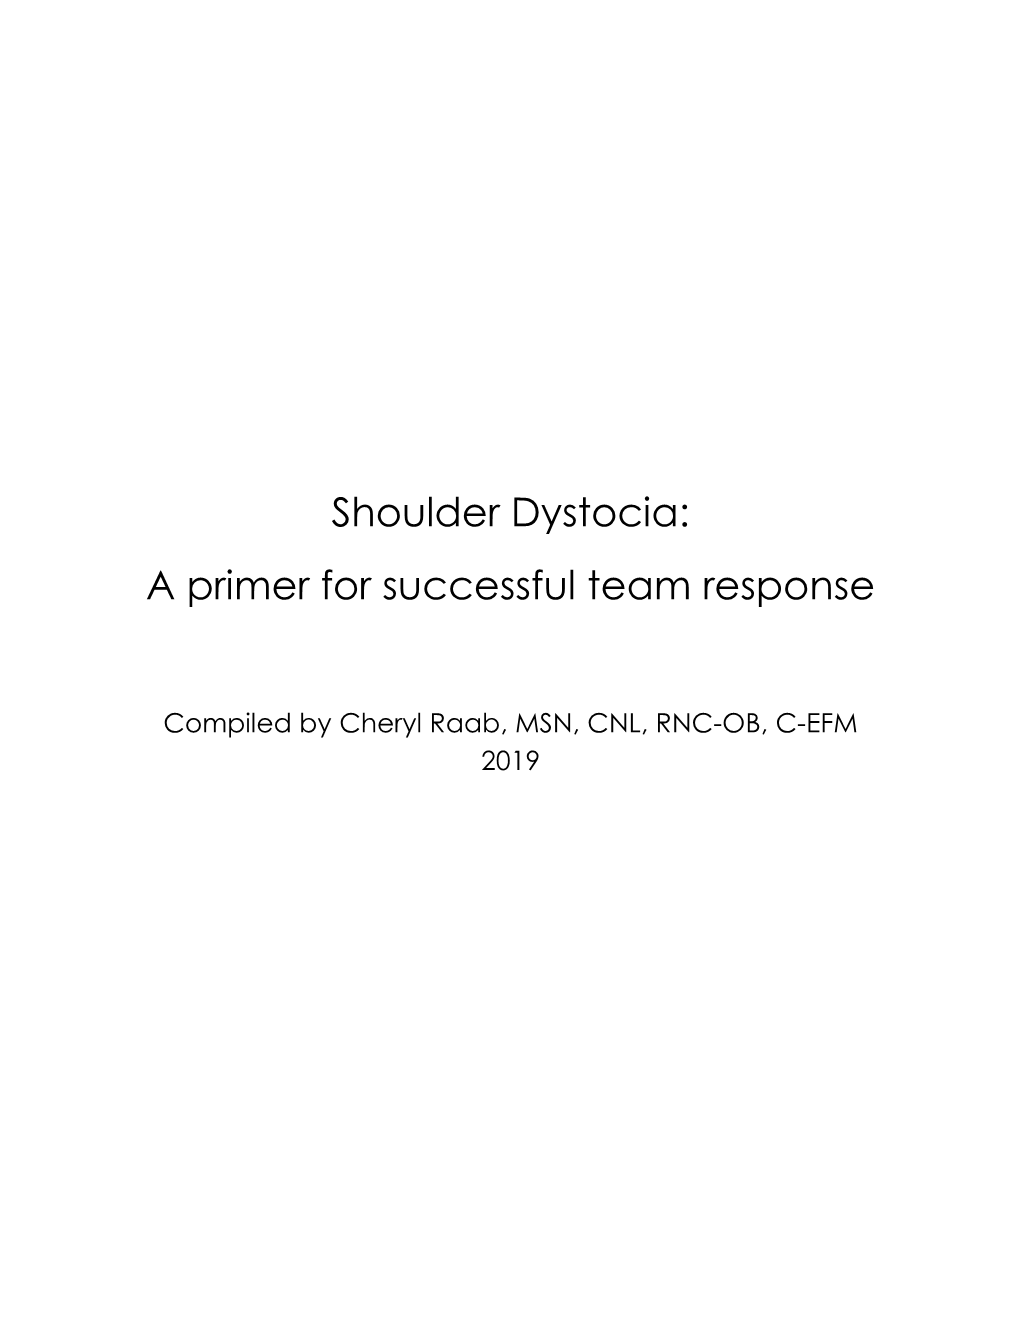 Shoulder Dystocia: a Primer for Successful Team Response